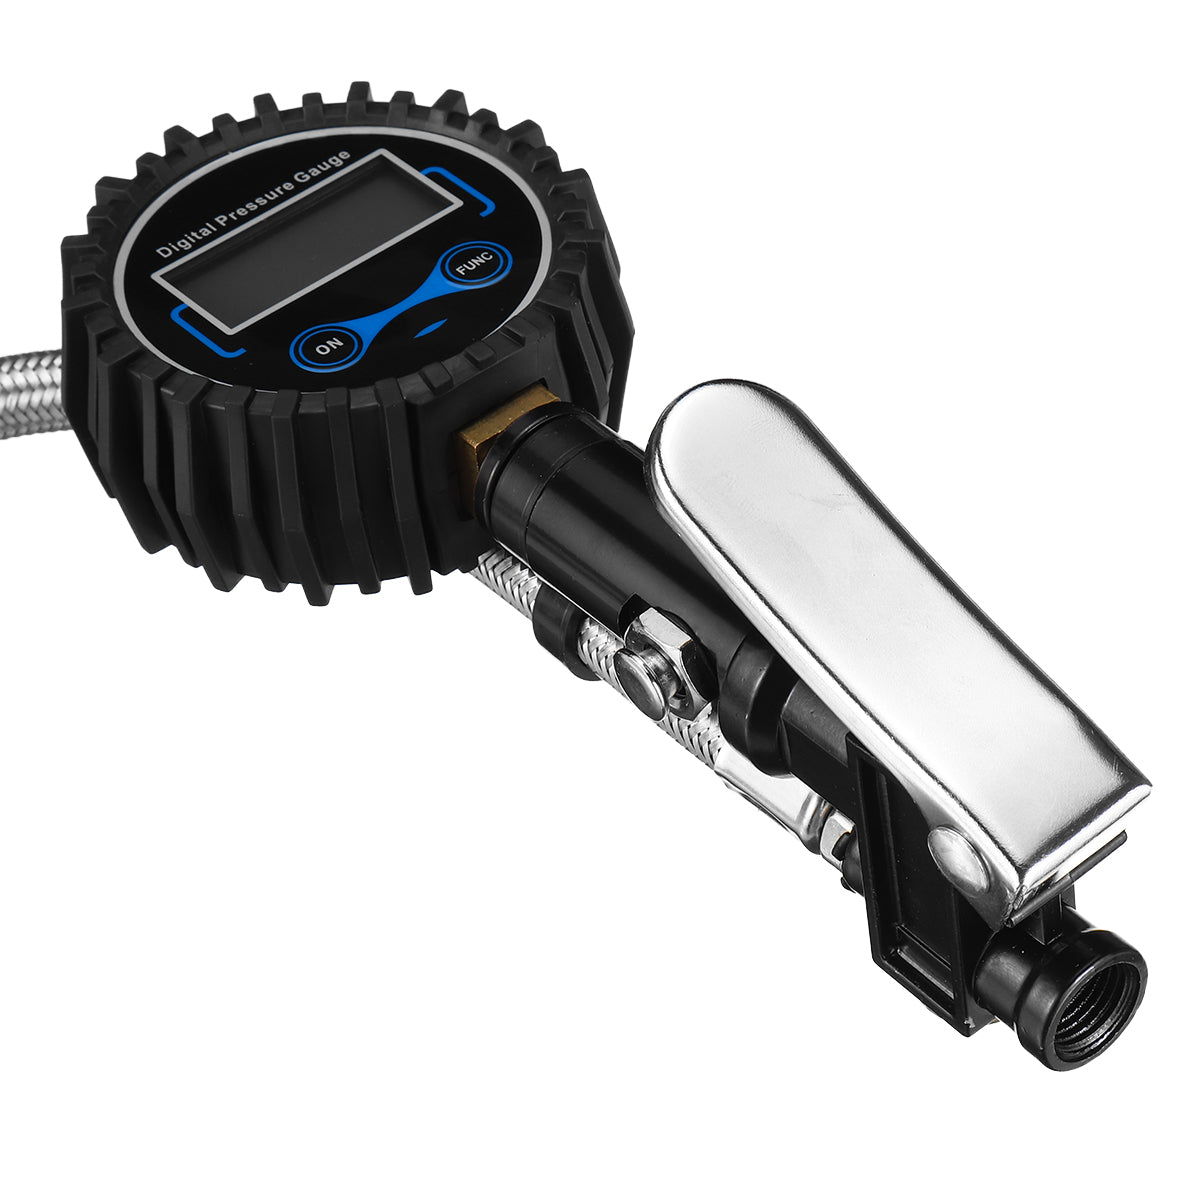 Black Digital Tire Inflator Gauge Air Compressor Pump Quick Connect Coupler for Car Truck Motorcycle